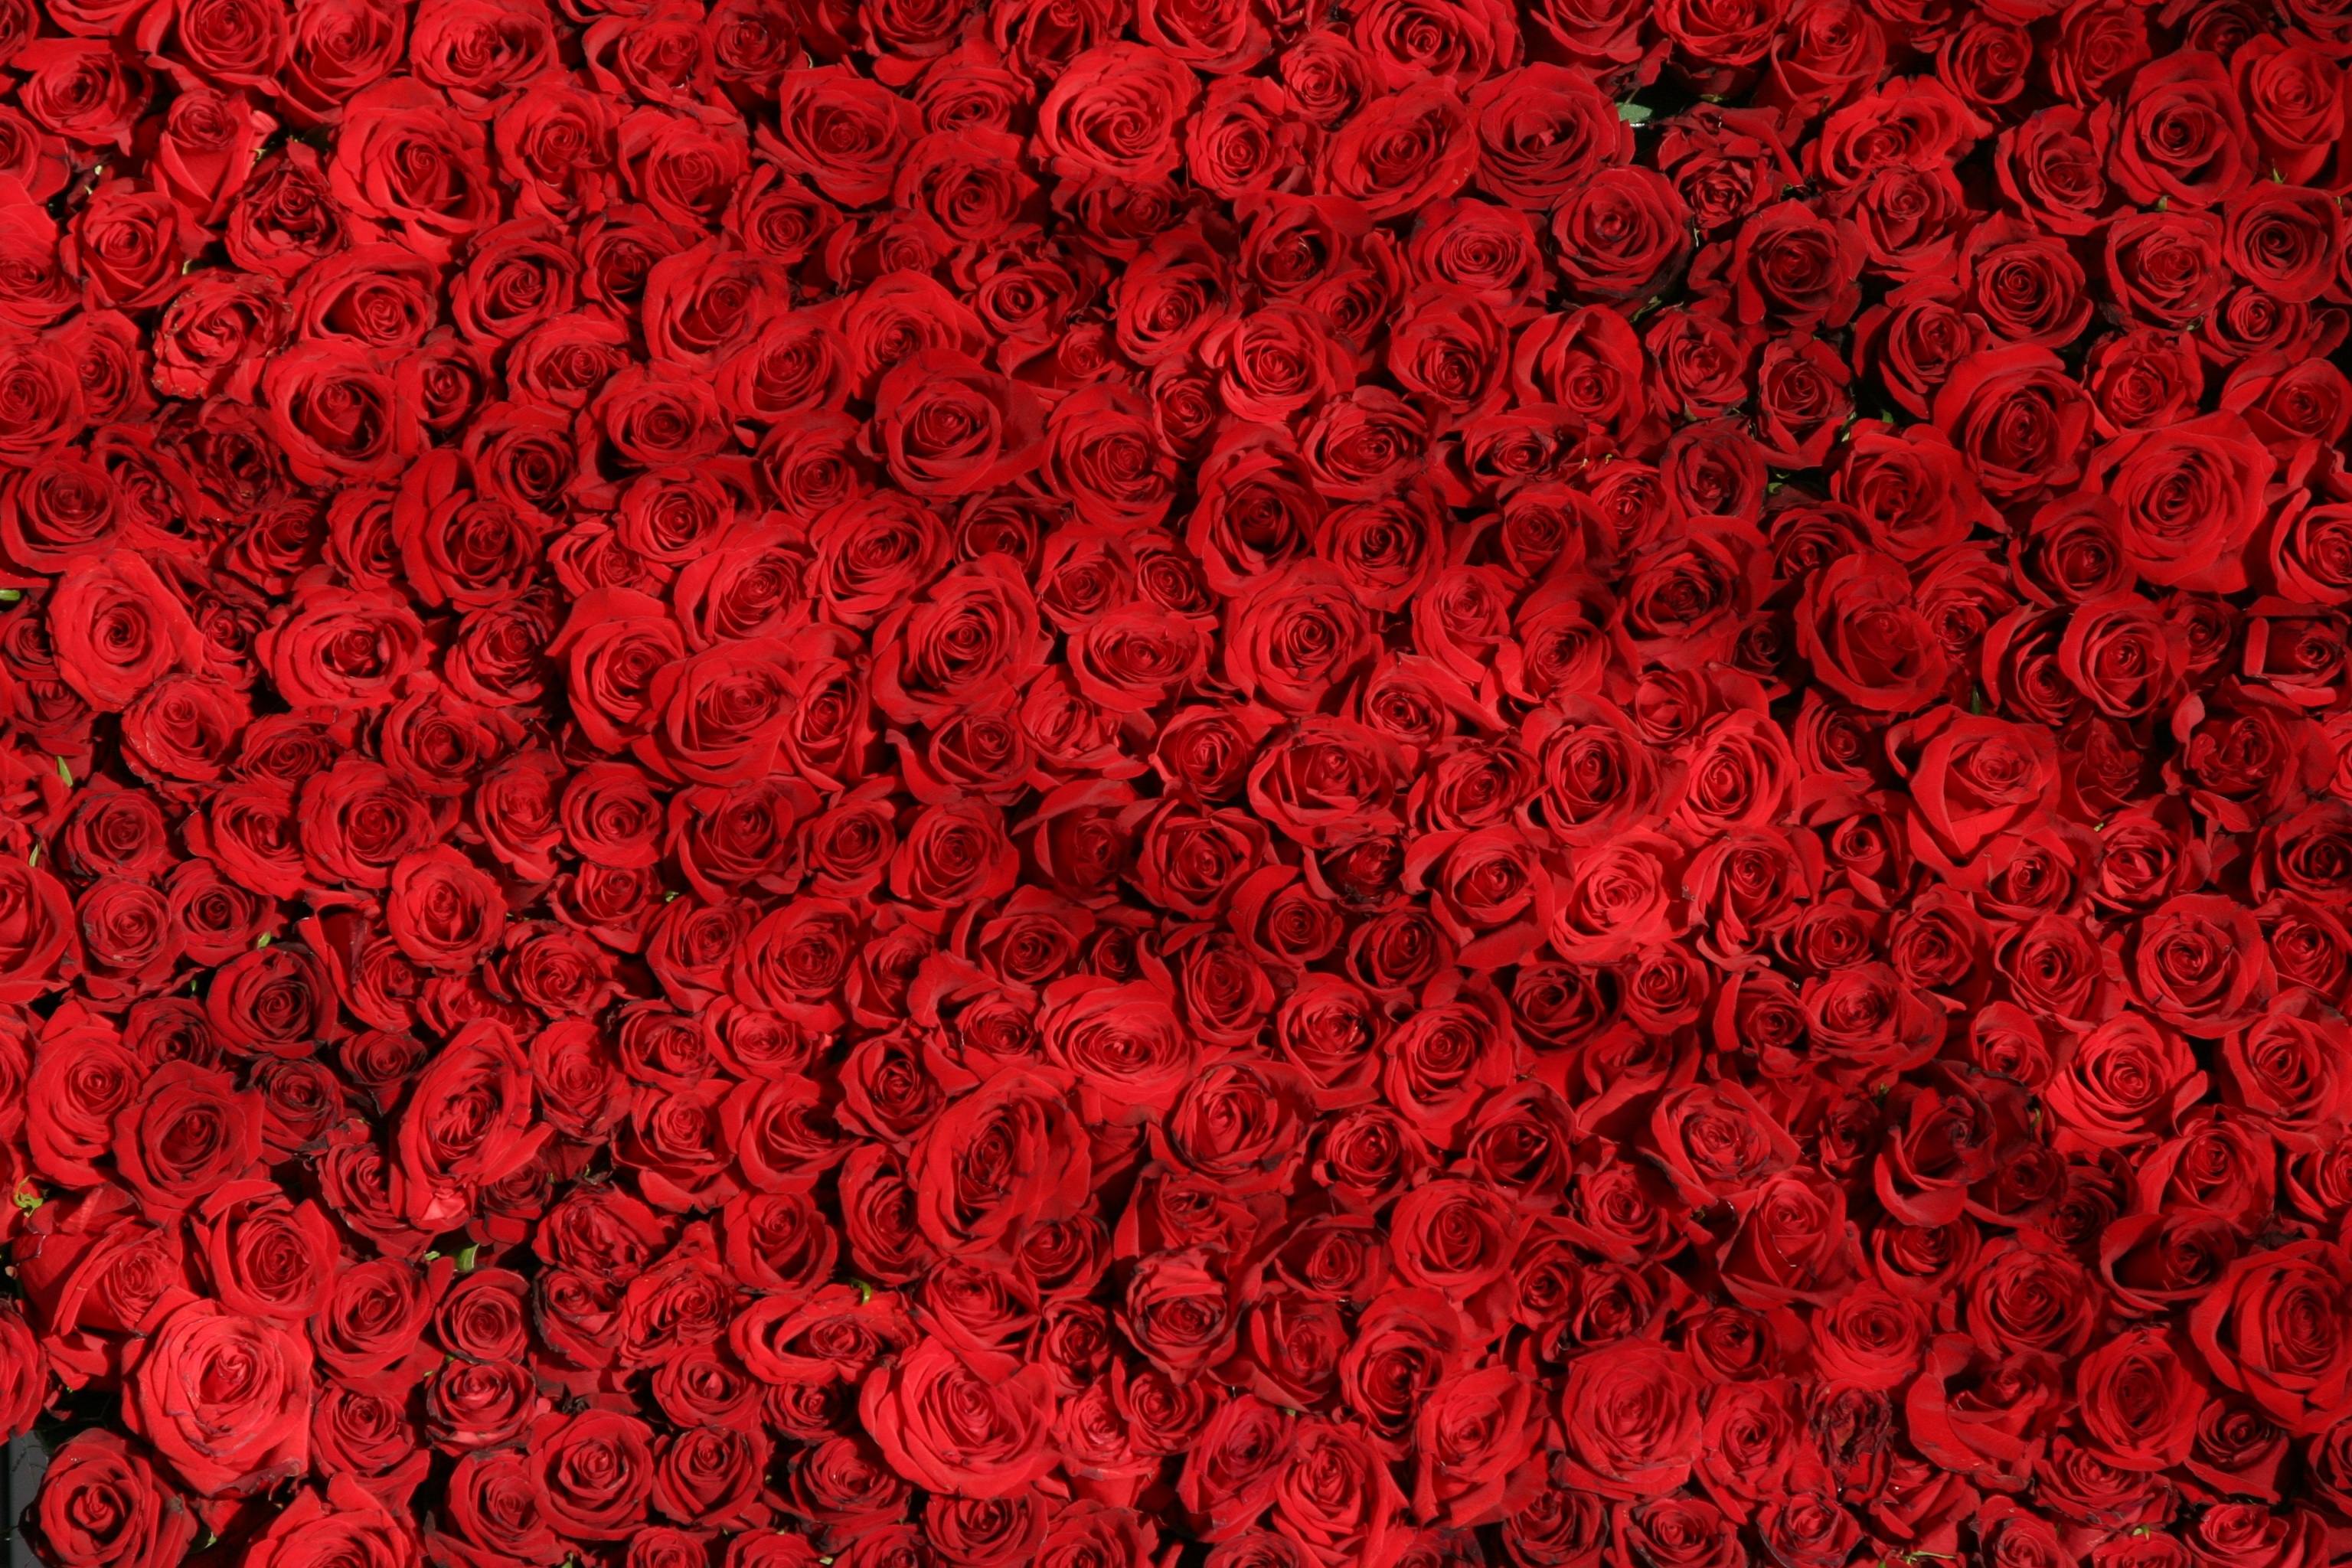 A million scarlet roses